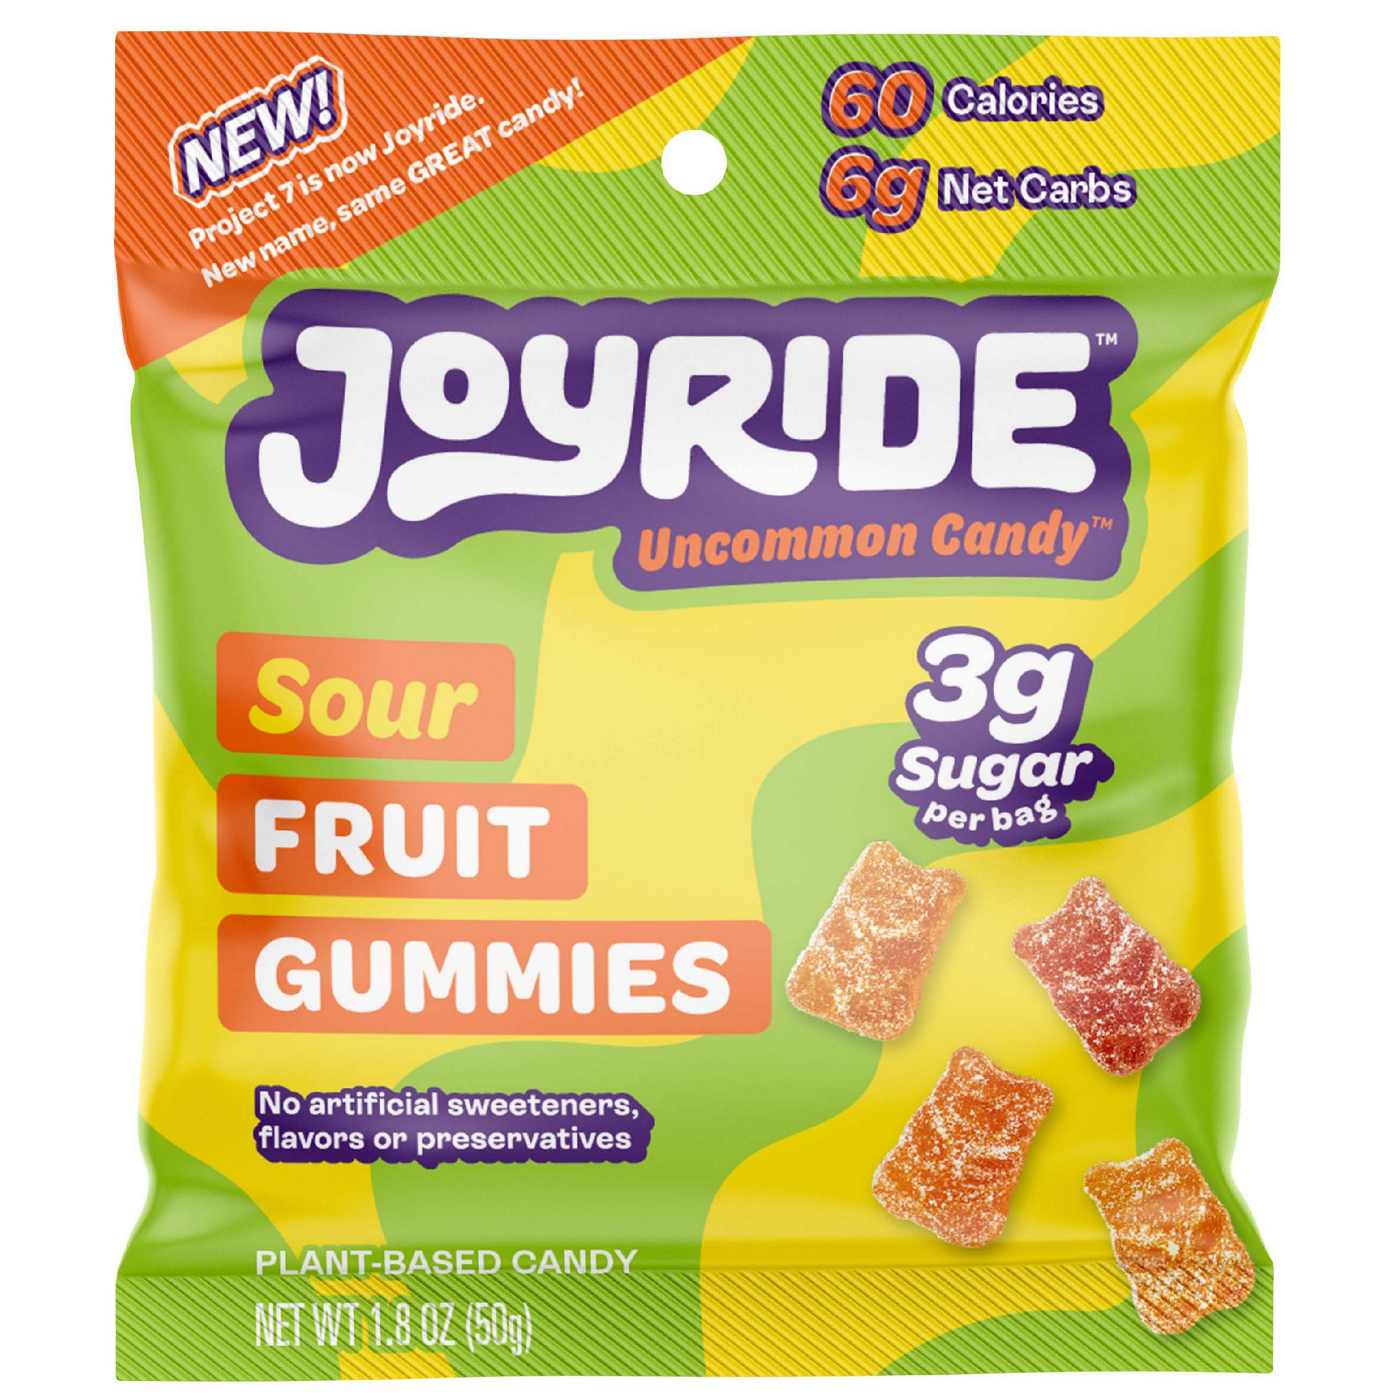 Joyride Sour Fruit Gummies; image 1 of 2